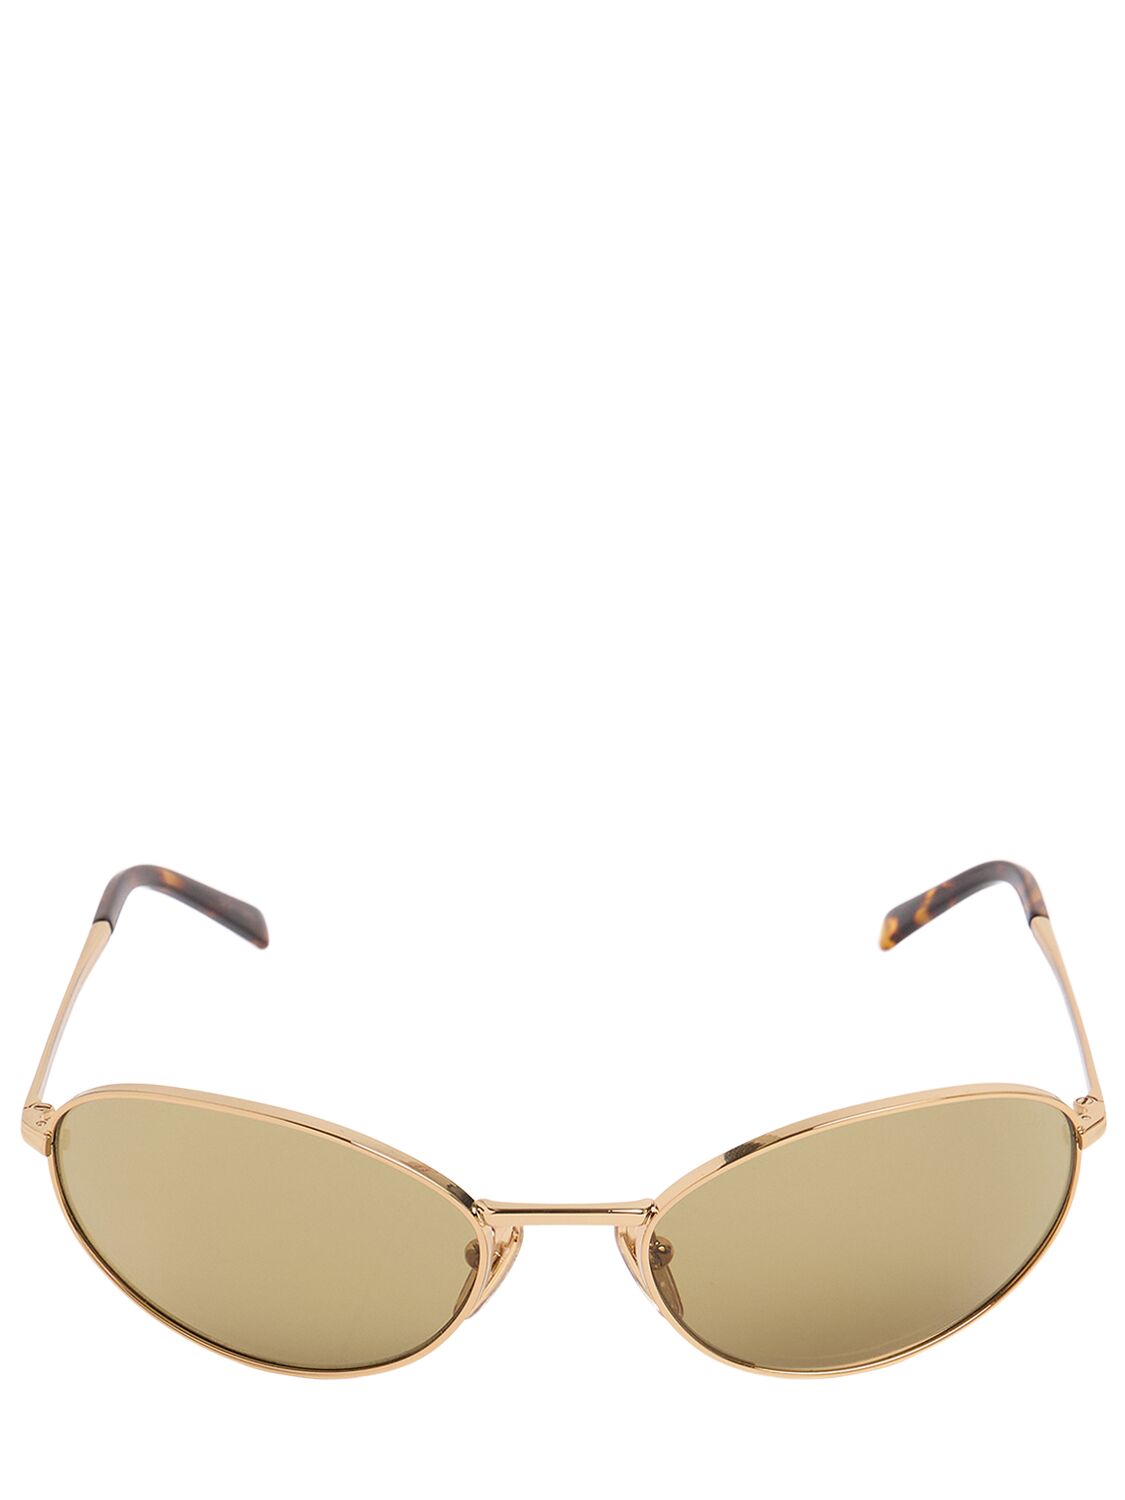 Prada Round Metal Sunglasses In Gold/green